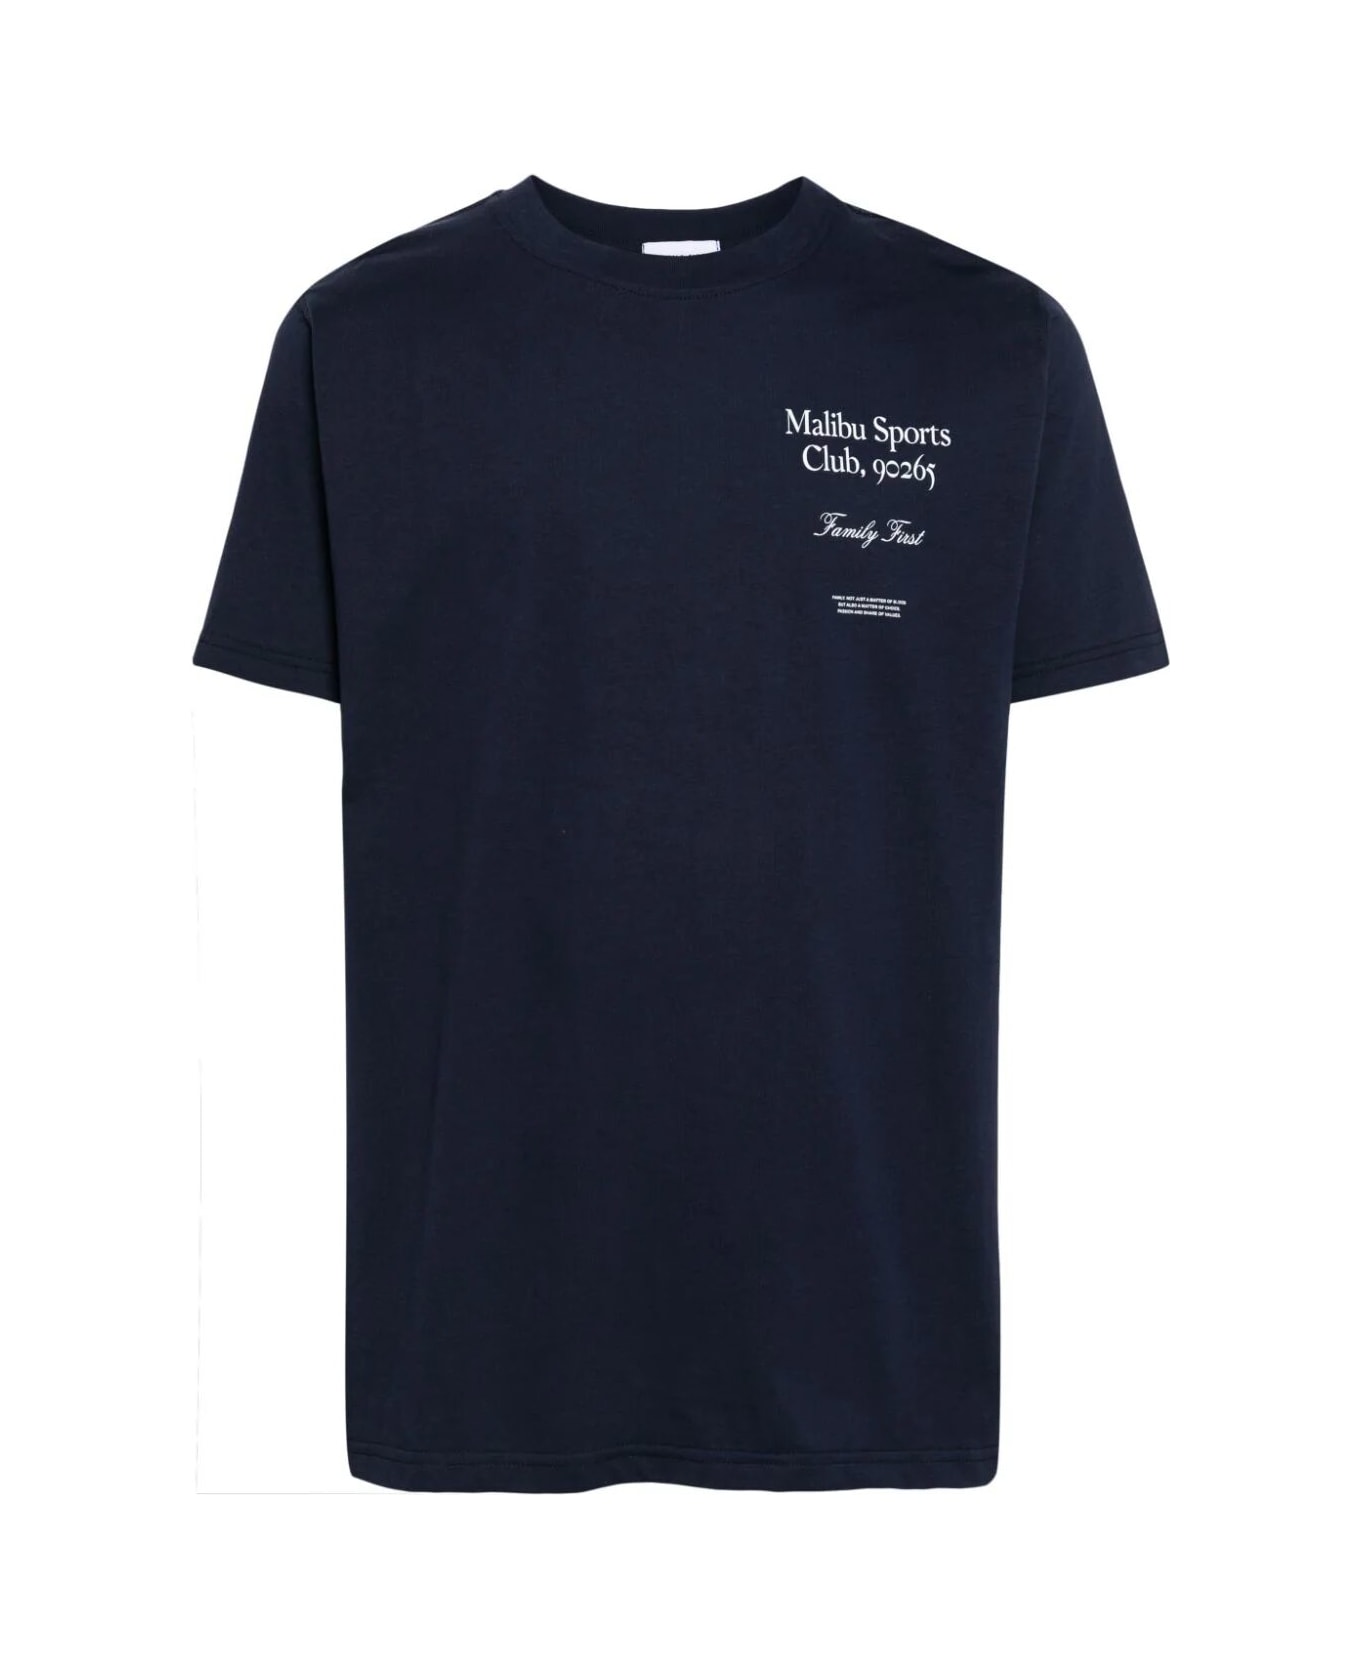 Family First Milano Malibu T-shirt - Dark Blue シャツ